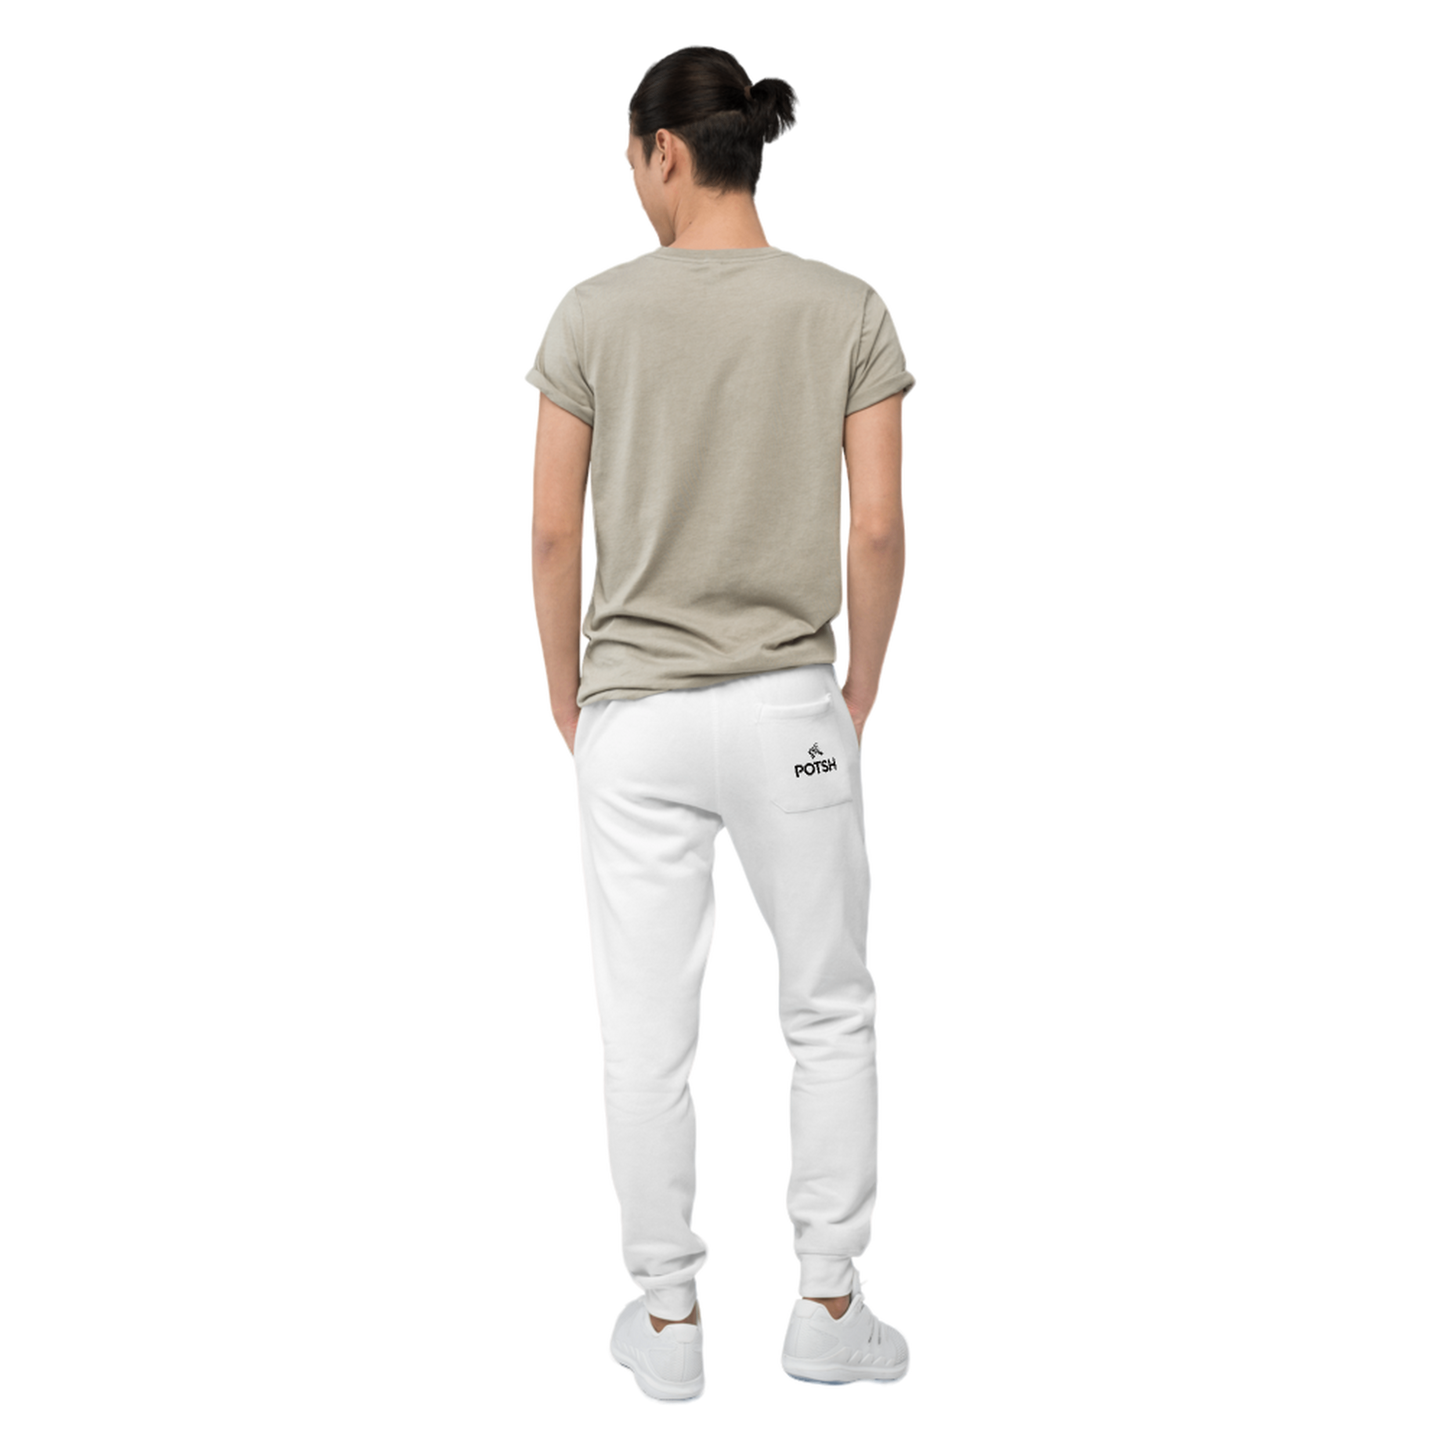 Men's Fleece Sweatpants with POTSH Back Pocket - White